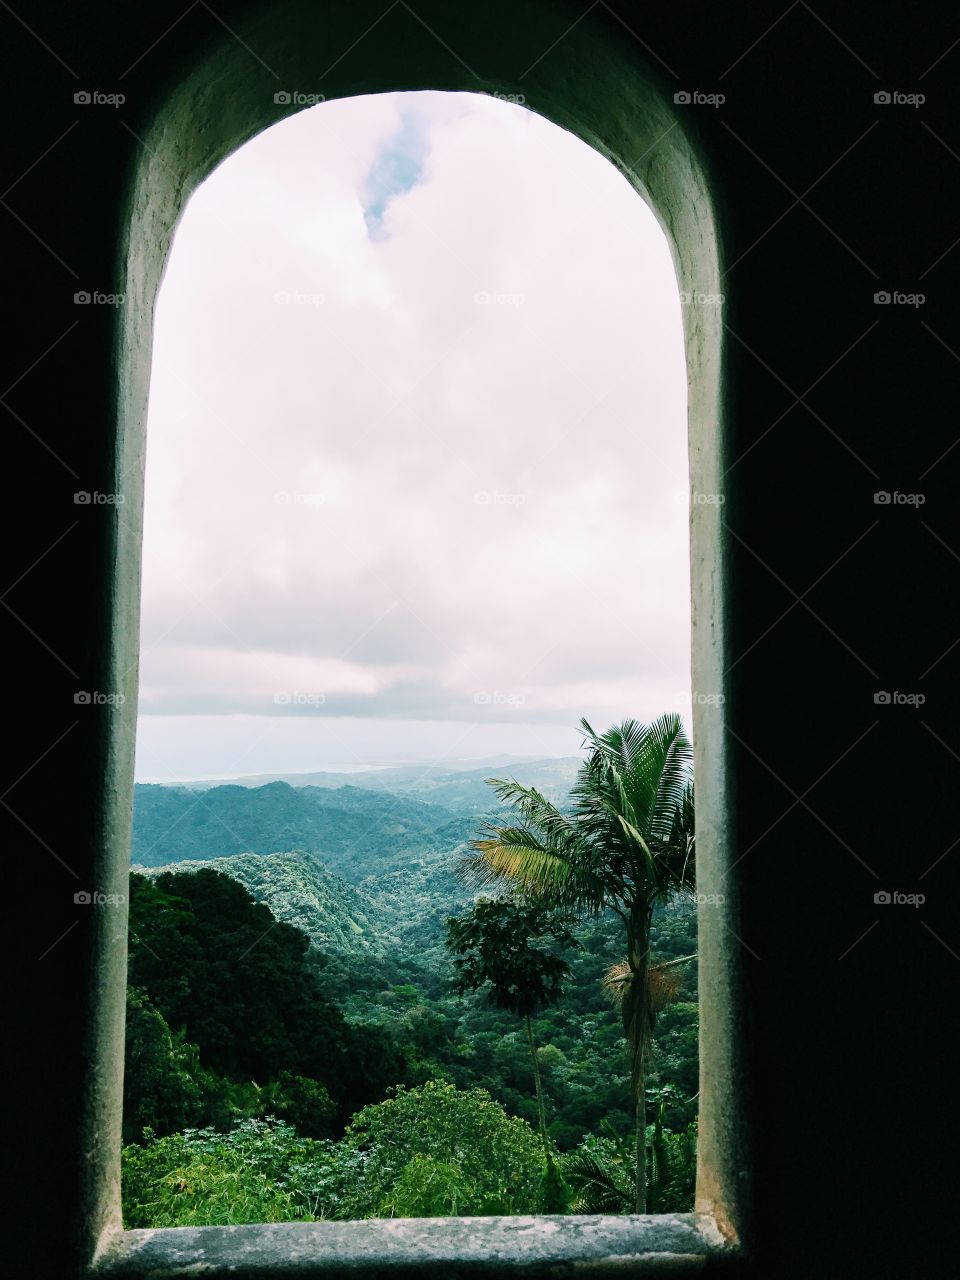 Rainforest in Puerto Rico